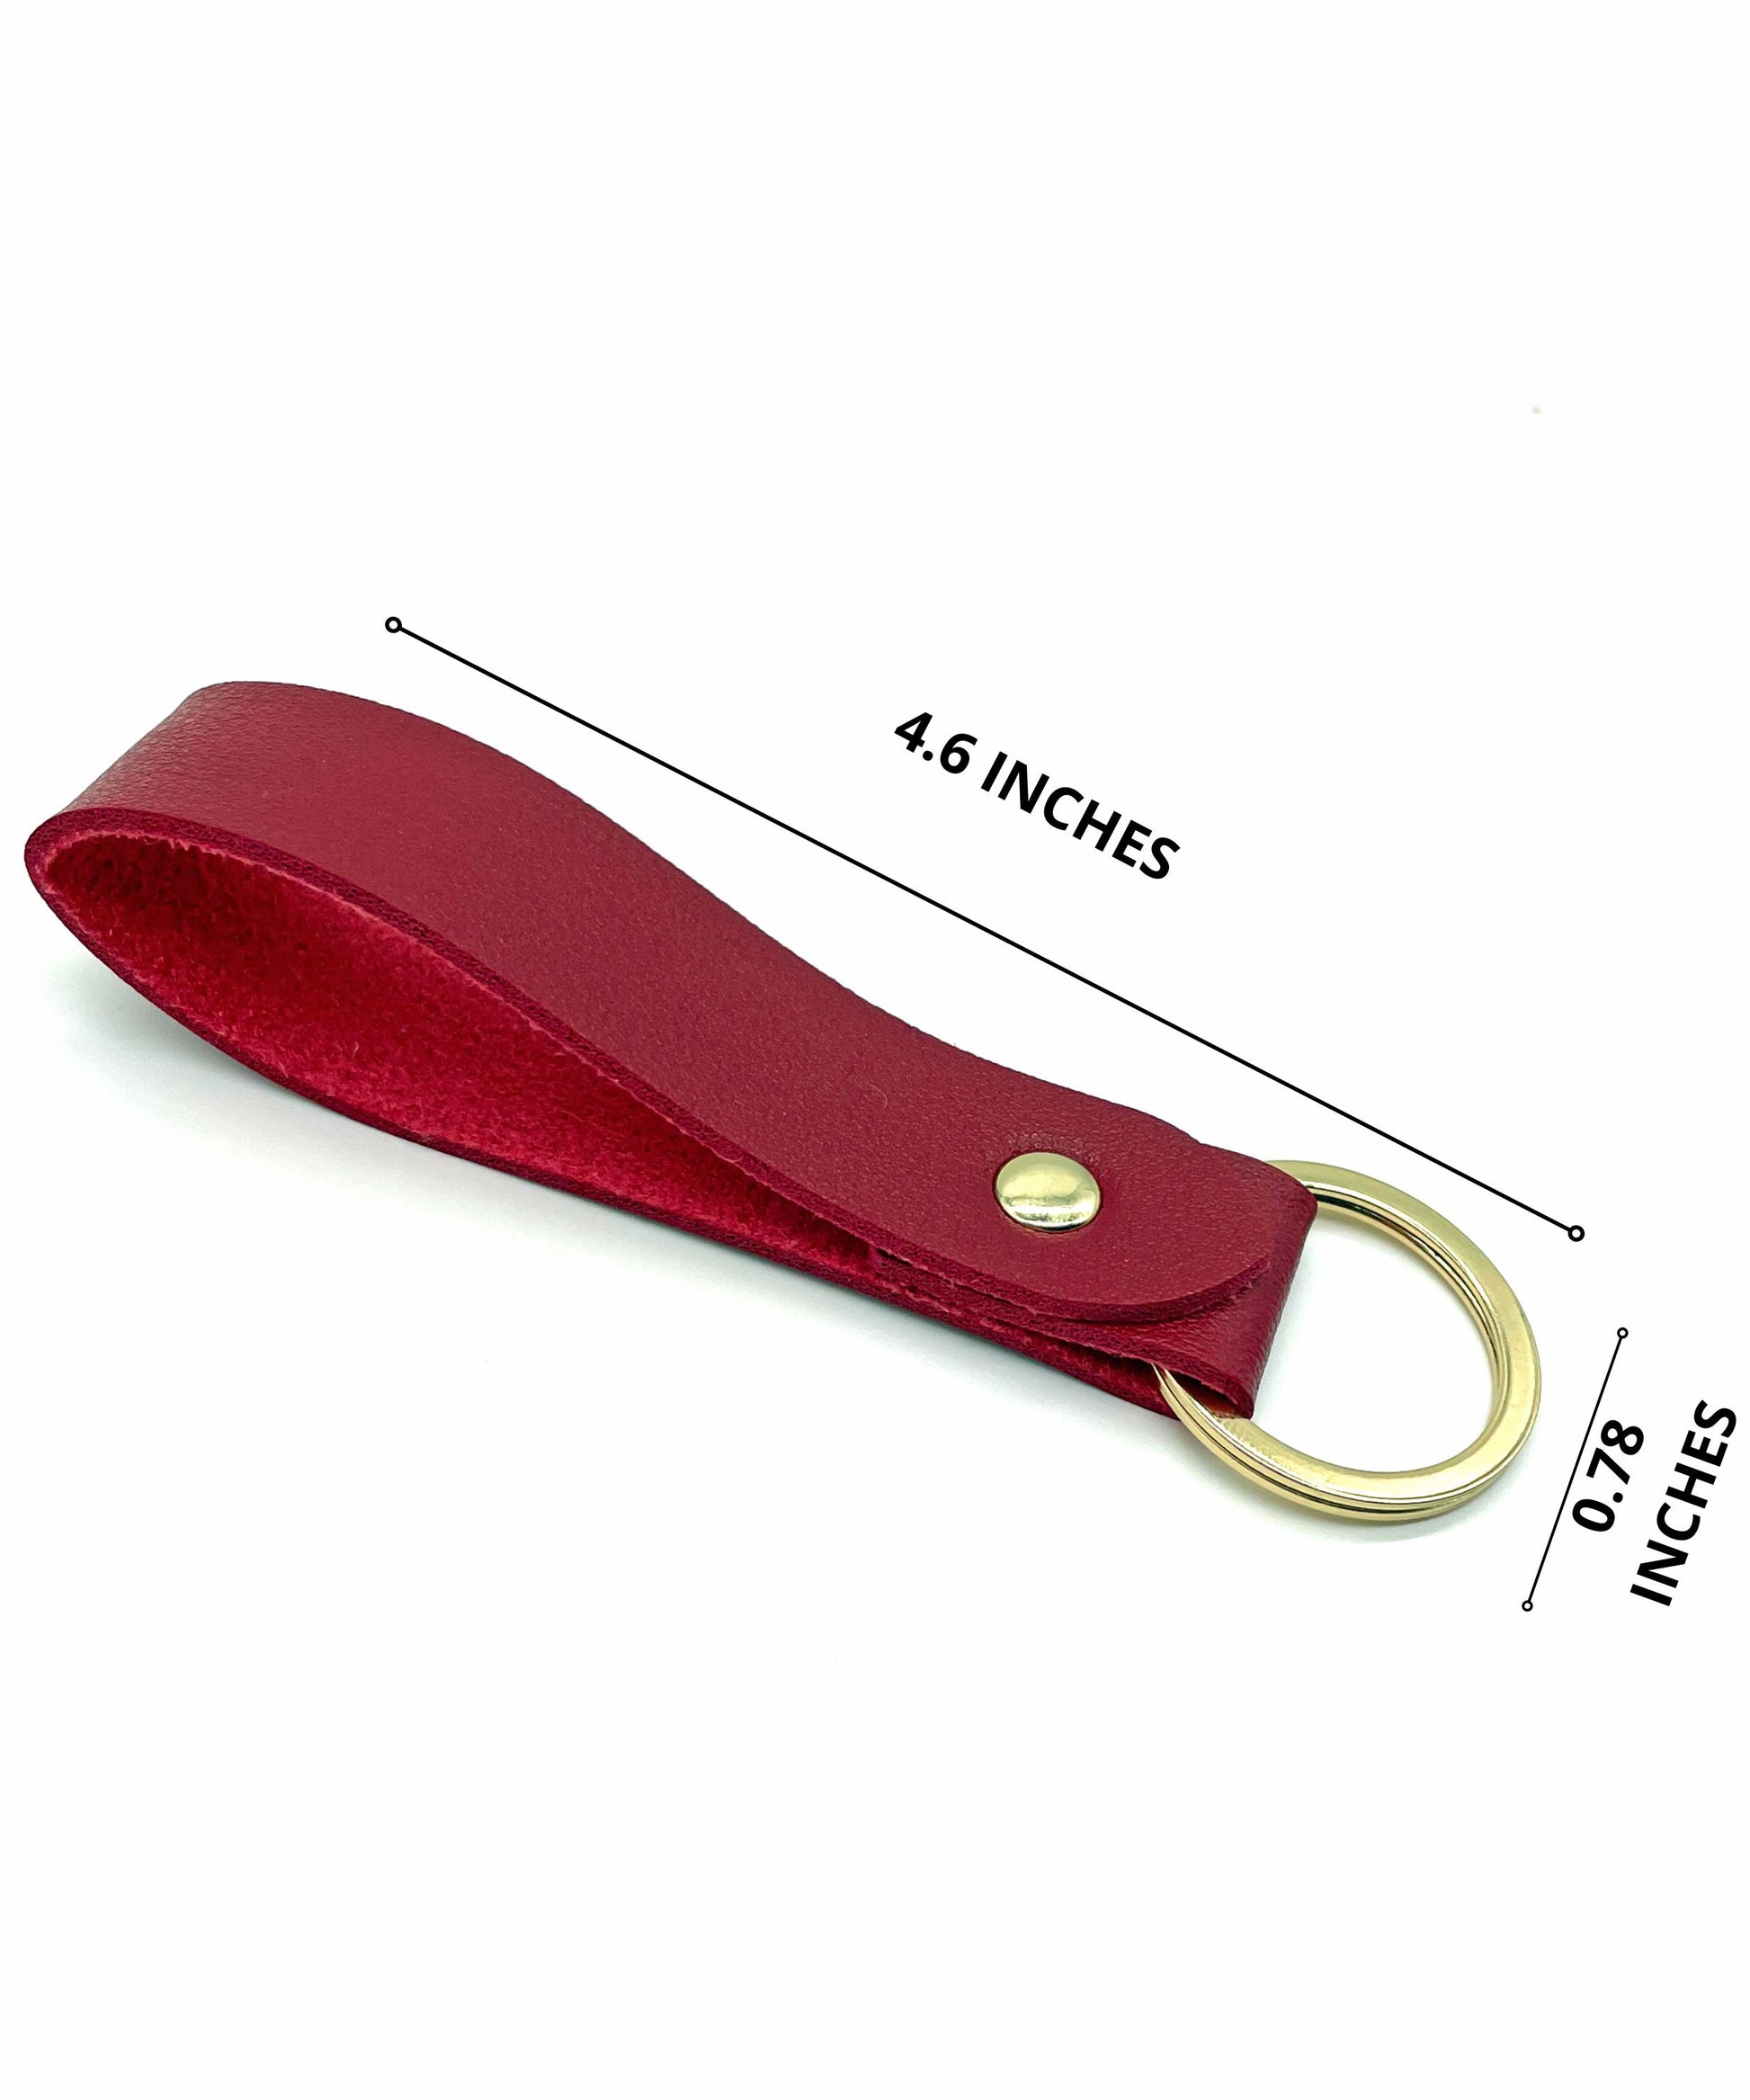 Vibrant Fuchsia leather keychain with measurements.